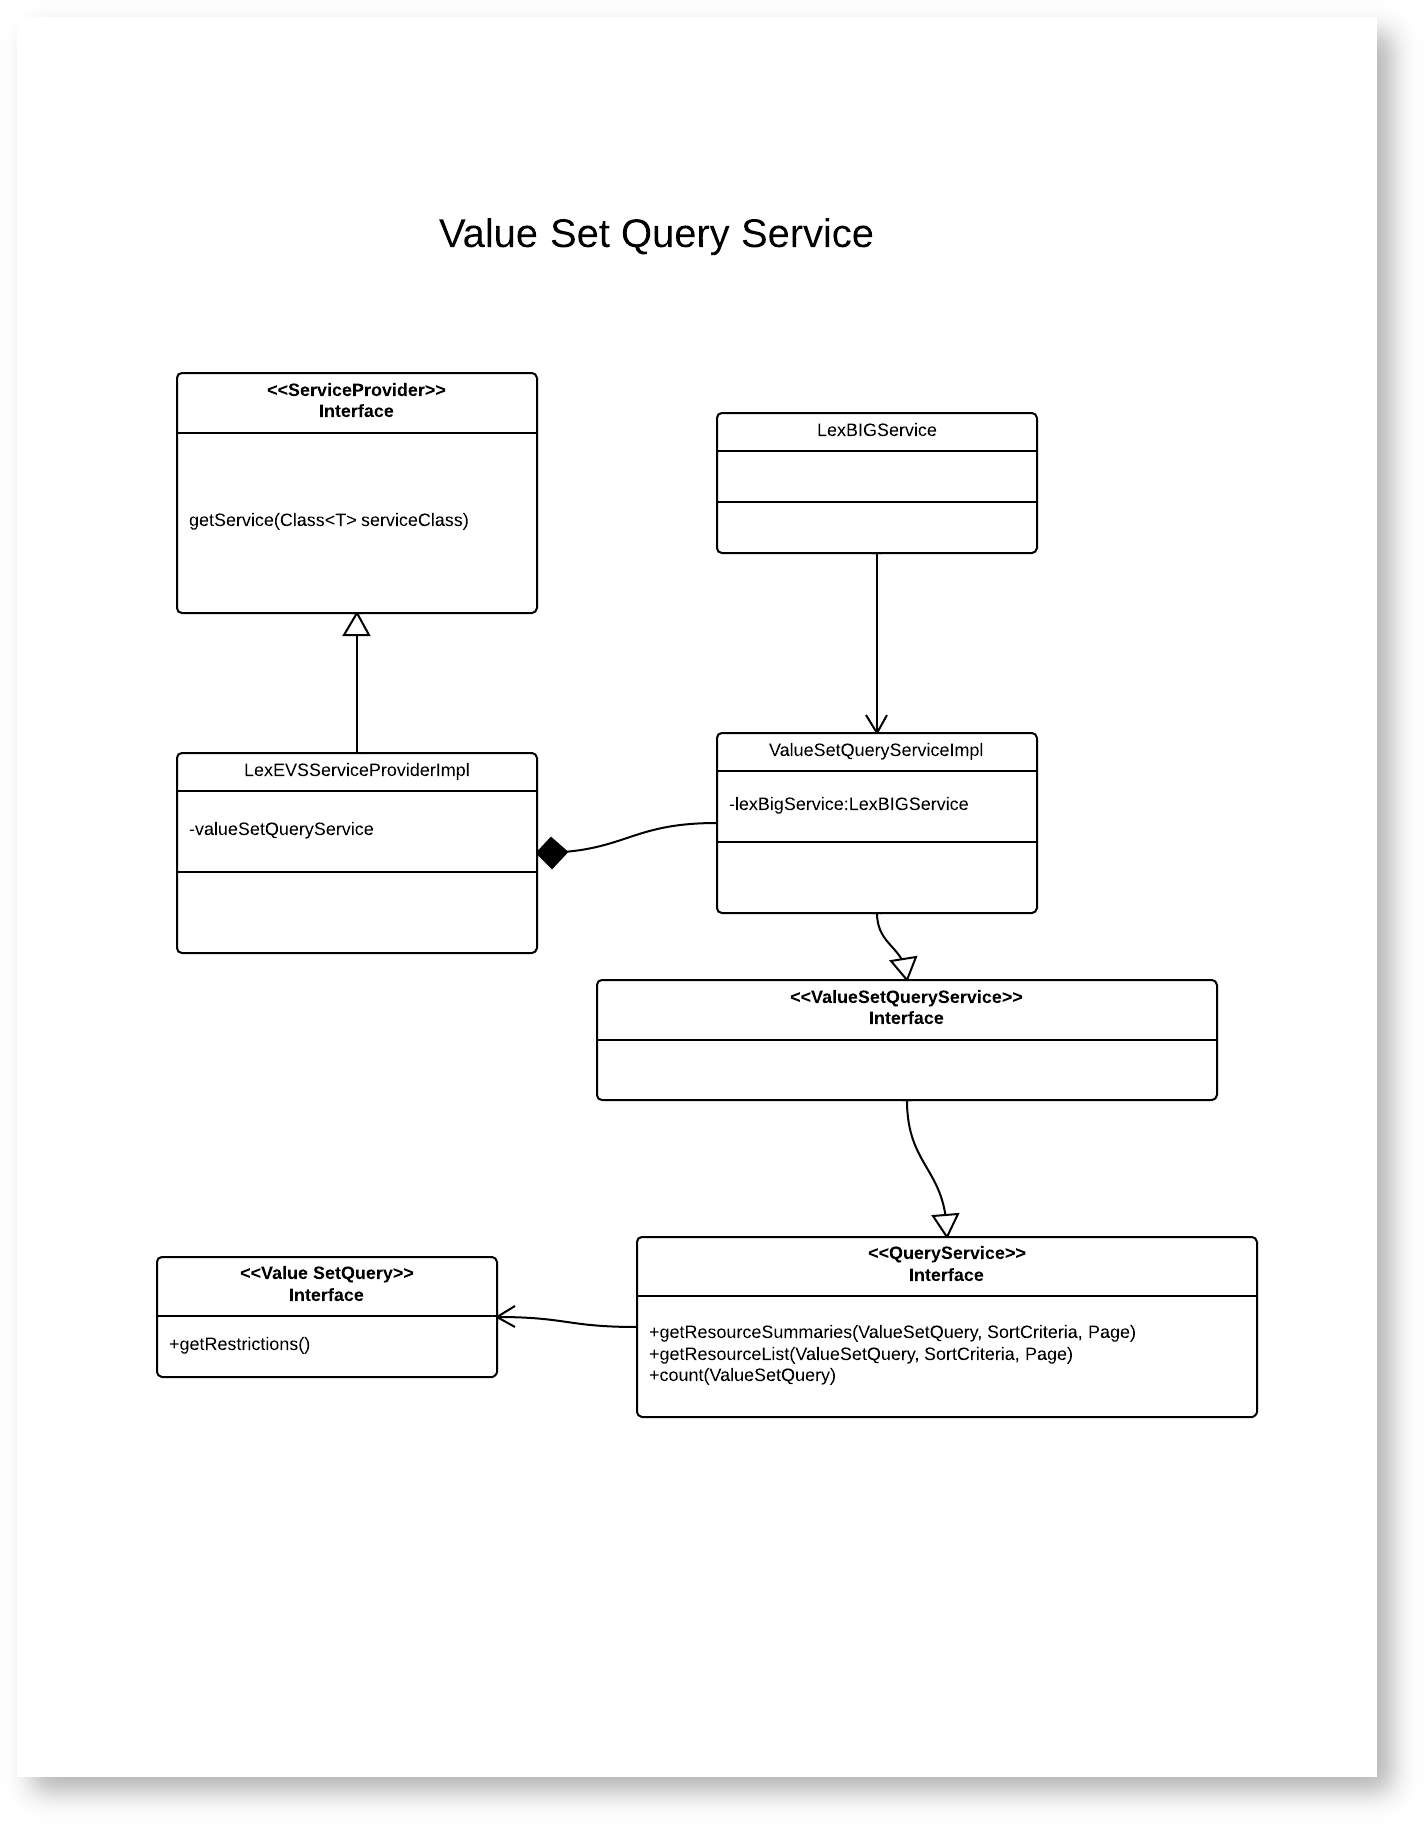 Value set query service diagram